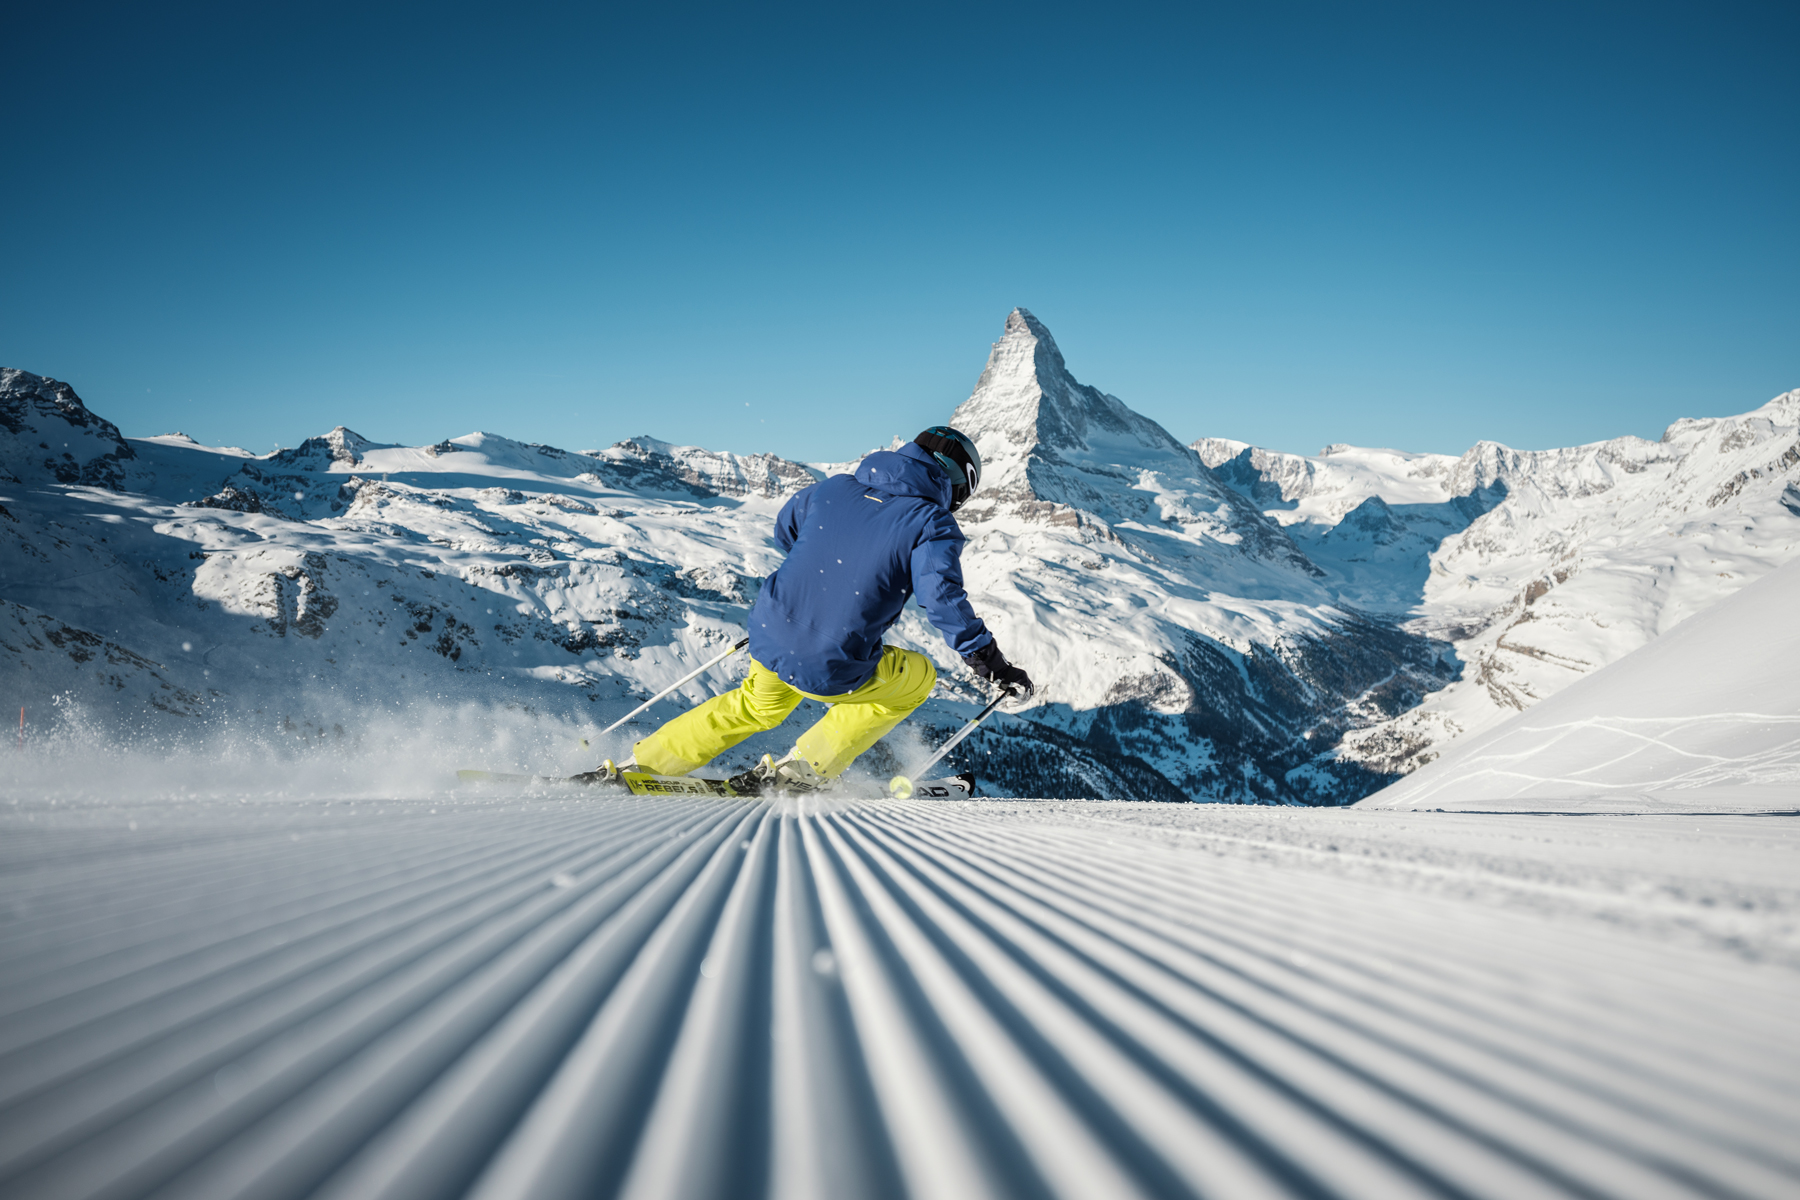 Ski area expansion on 5 December 2020 | Zermatt Winter Opening Weeks